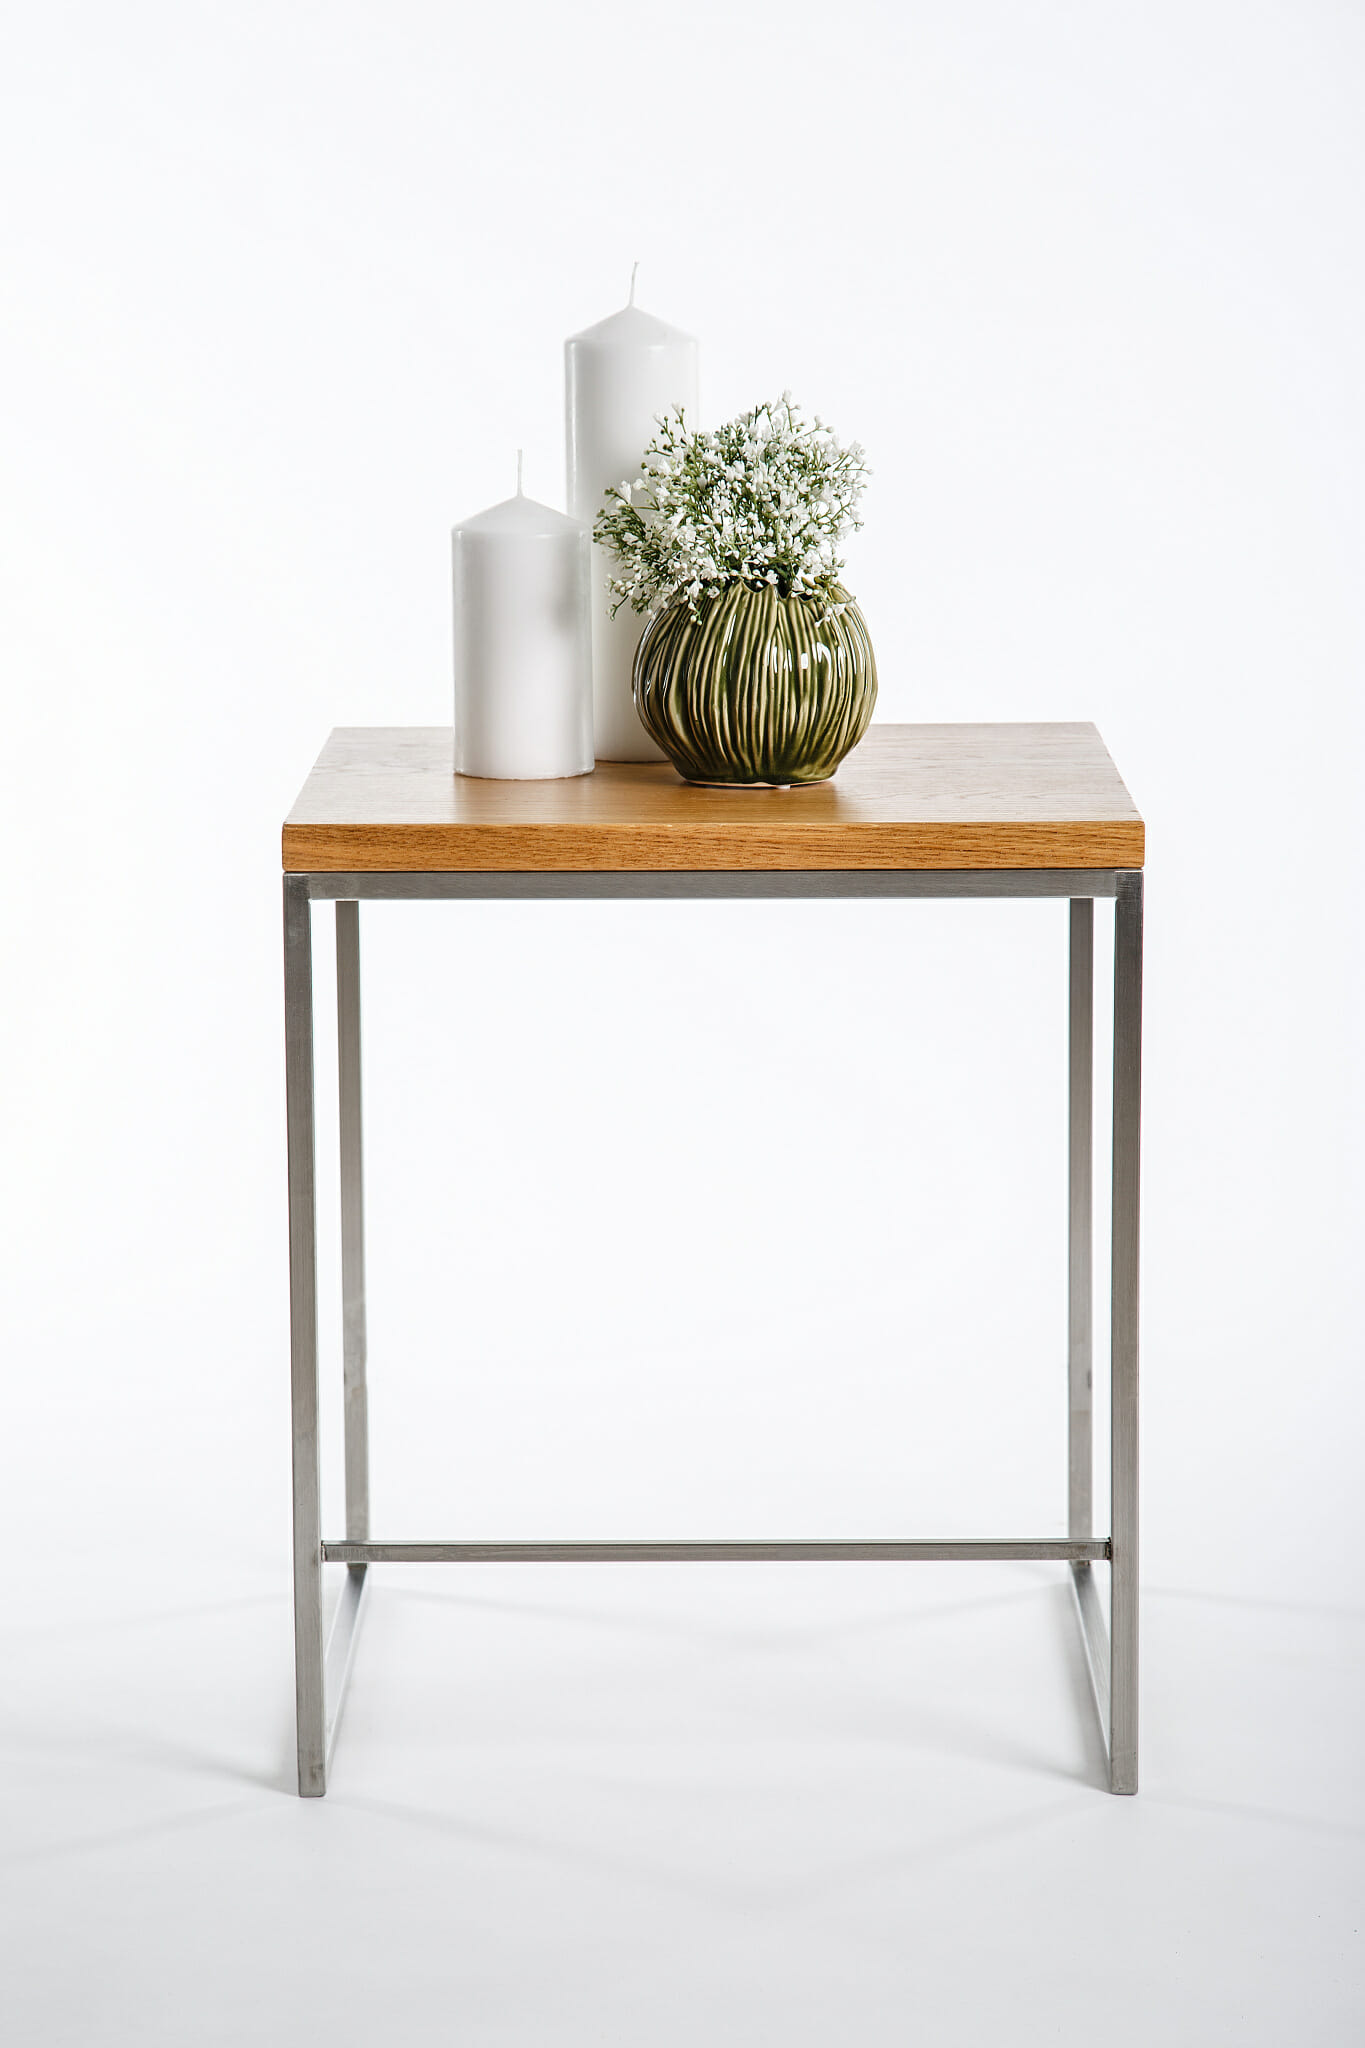 Saffron beds - Table (floor standing) bt1 with decorative elements